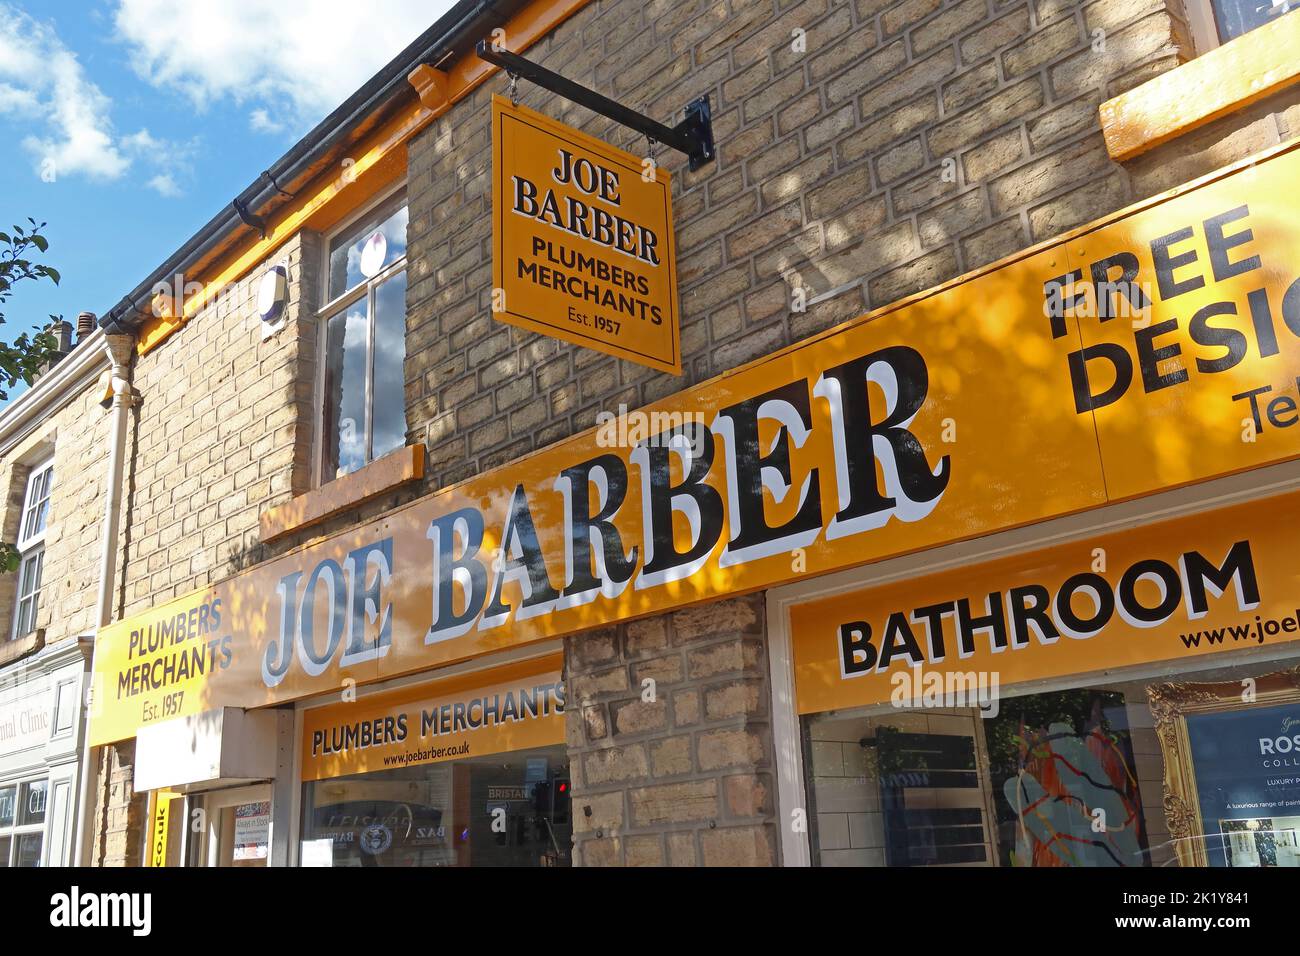 Joe Barber plumber Merchant, established 1957, 66-68 High Street West, Glossop, High Peak, Derbyshire, England, UK, SK13 8BH Stock Photo